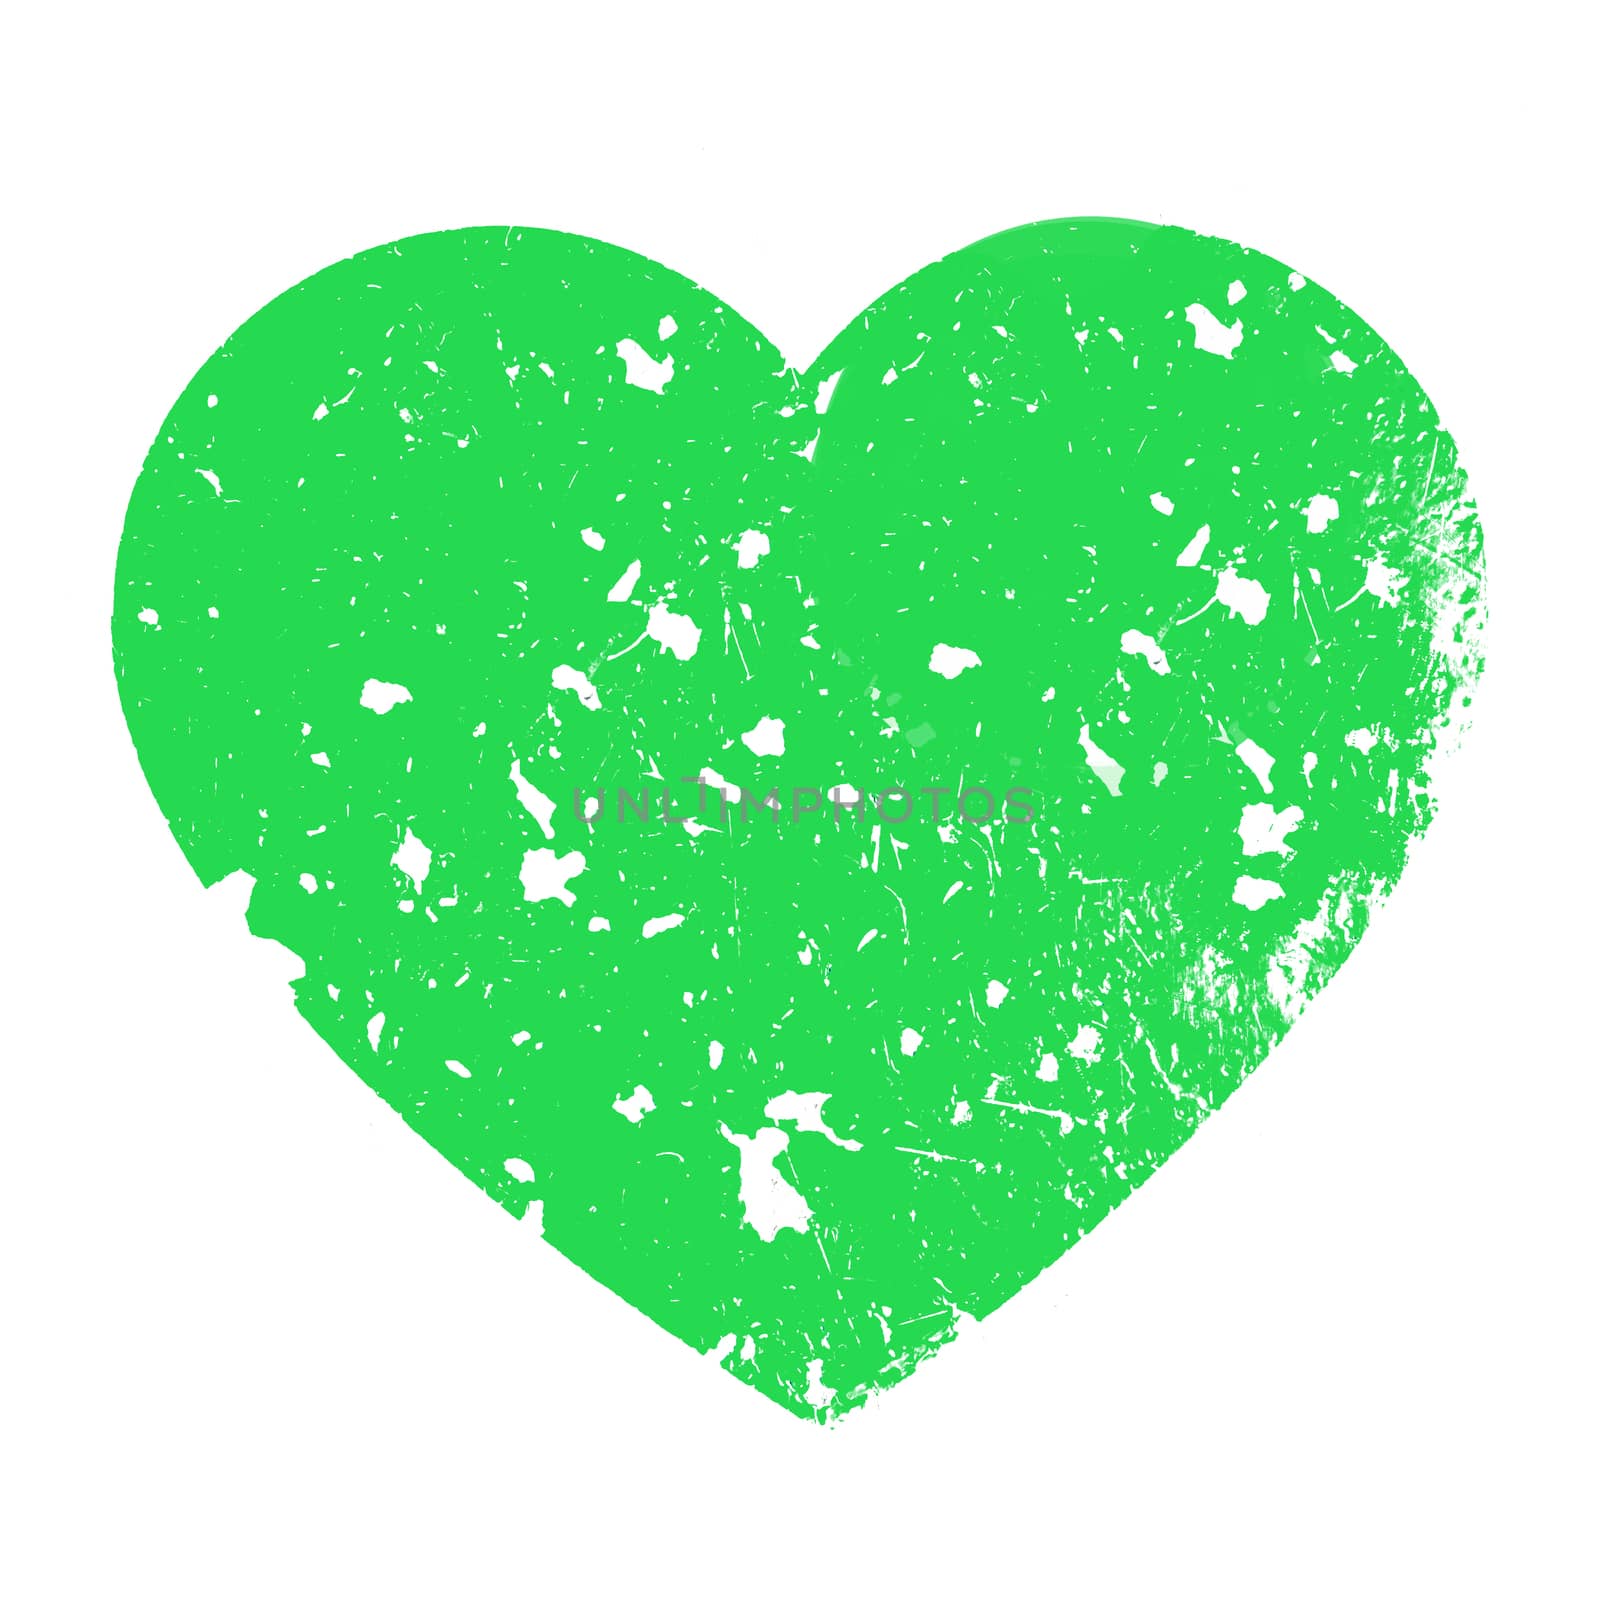 Green grungy heart by germanopoli